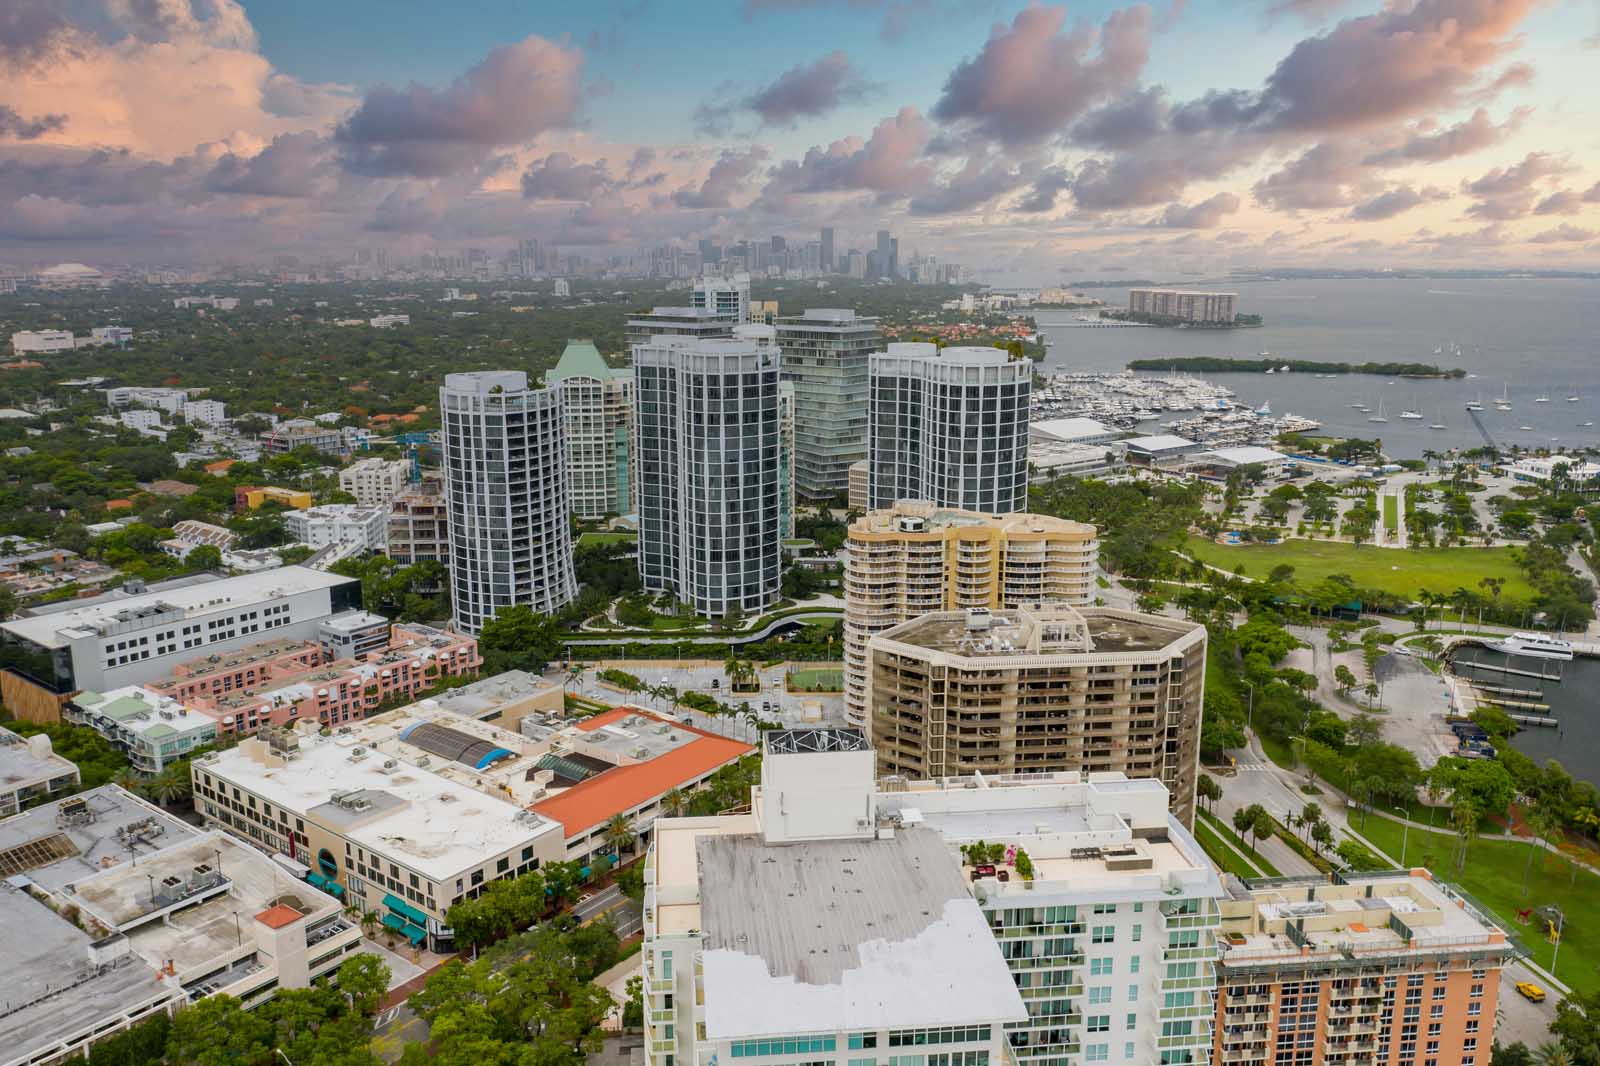 Where to stay in Miami coconut Grove